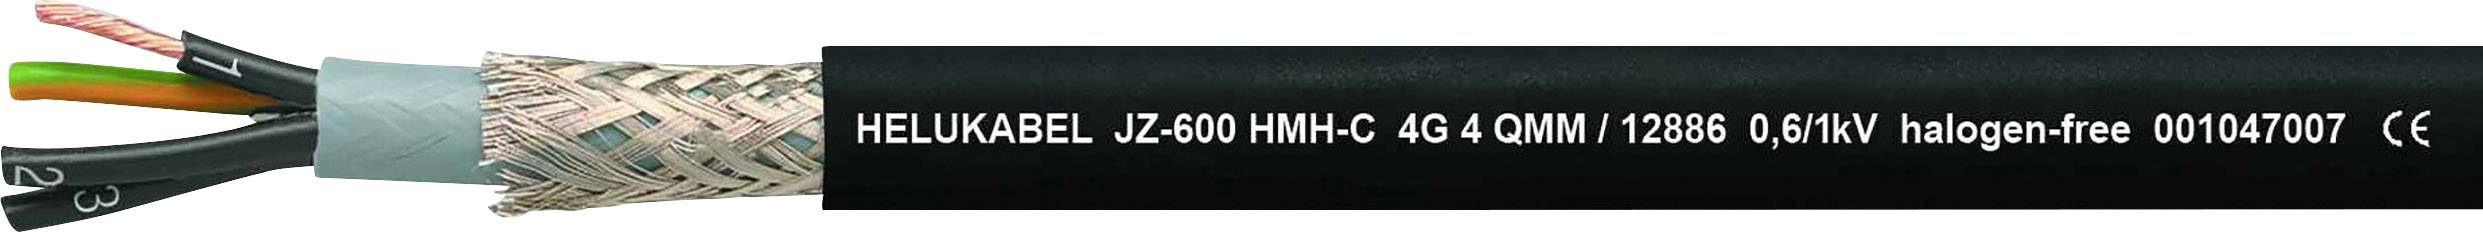 HELUKABEL JZ-600 HMH-C Steuerleitung 5 G 1.50 mm² Schwarz 12873-500 500 m